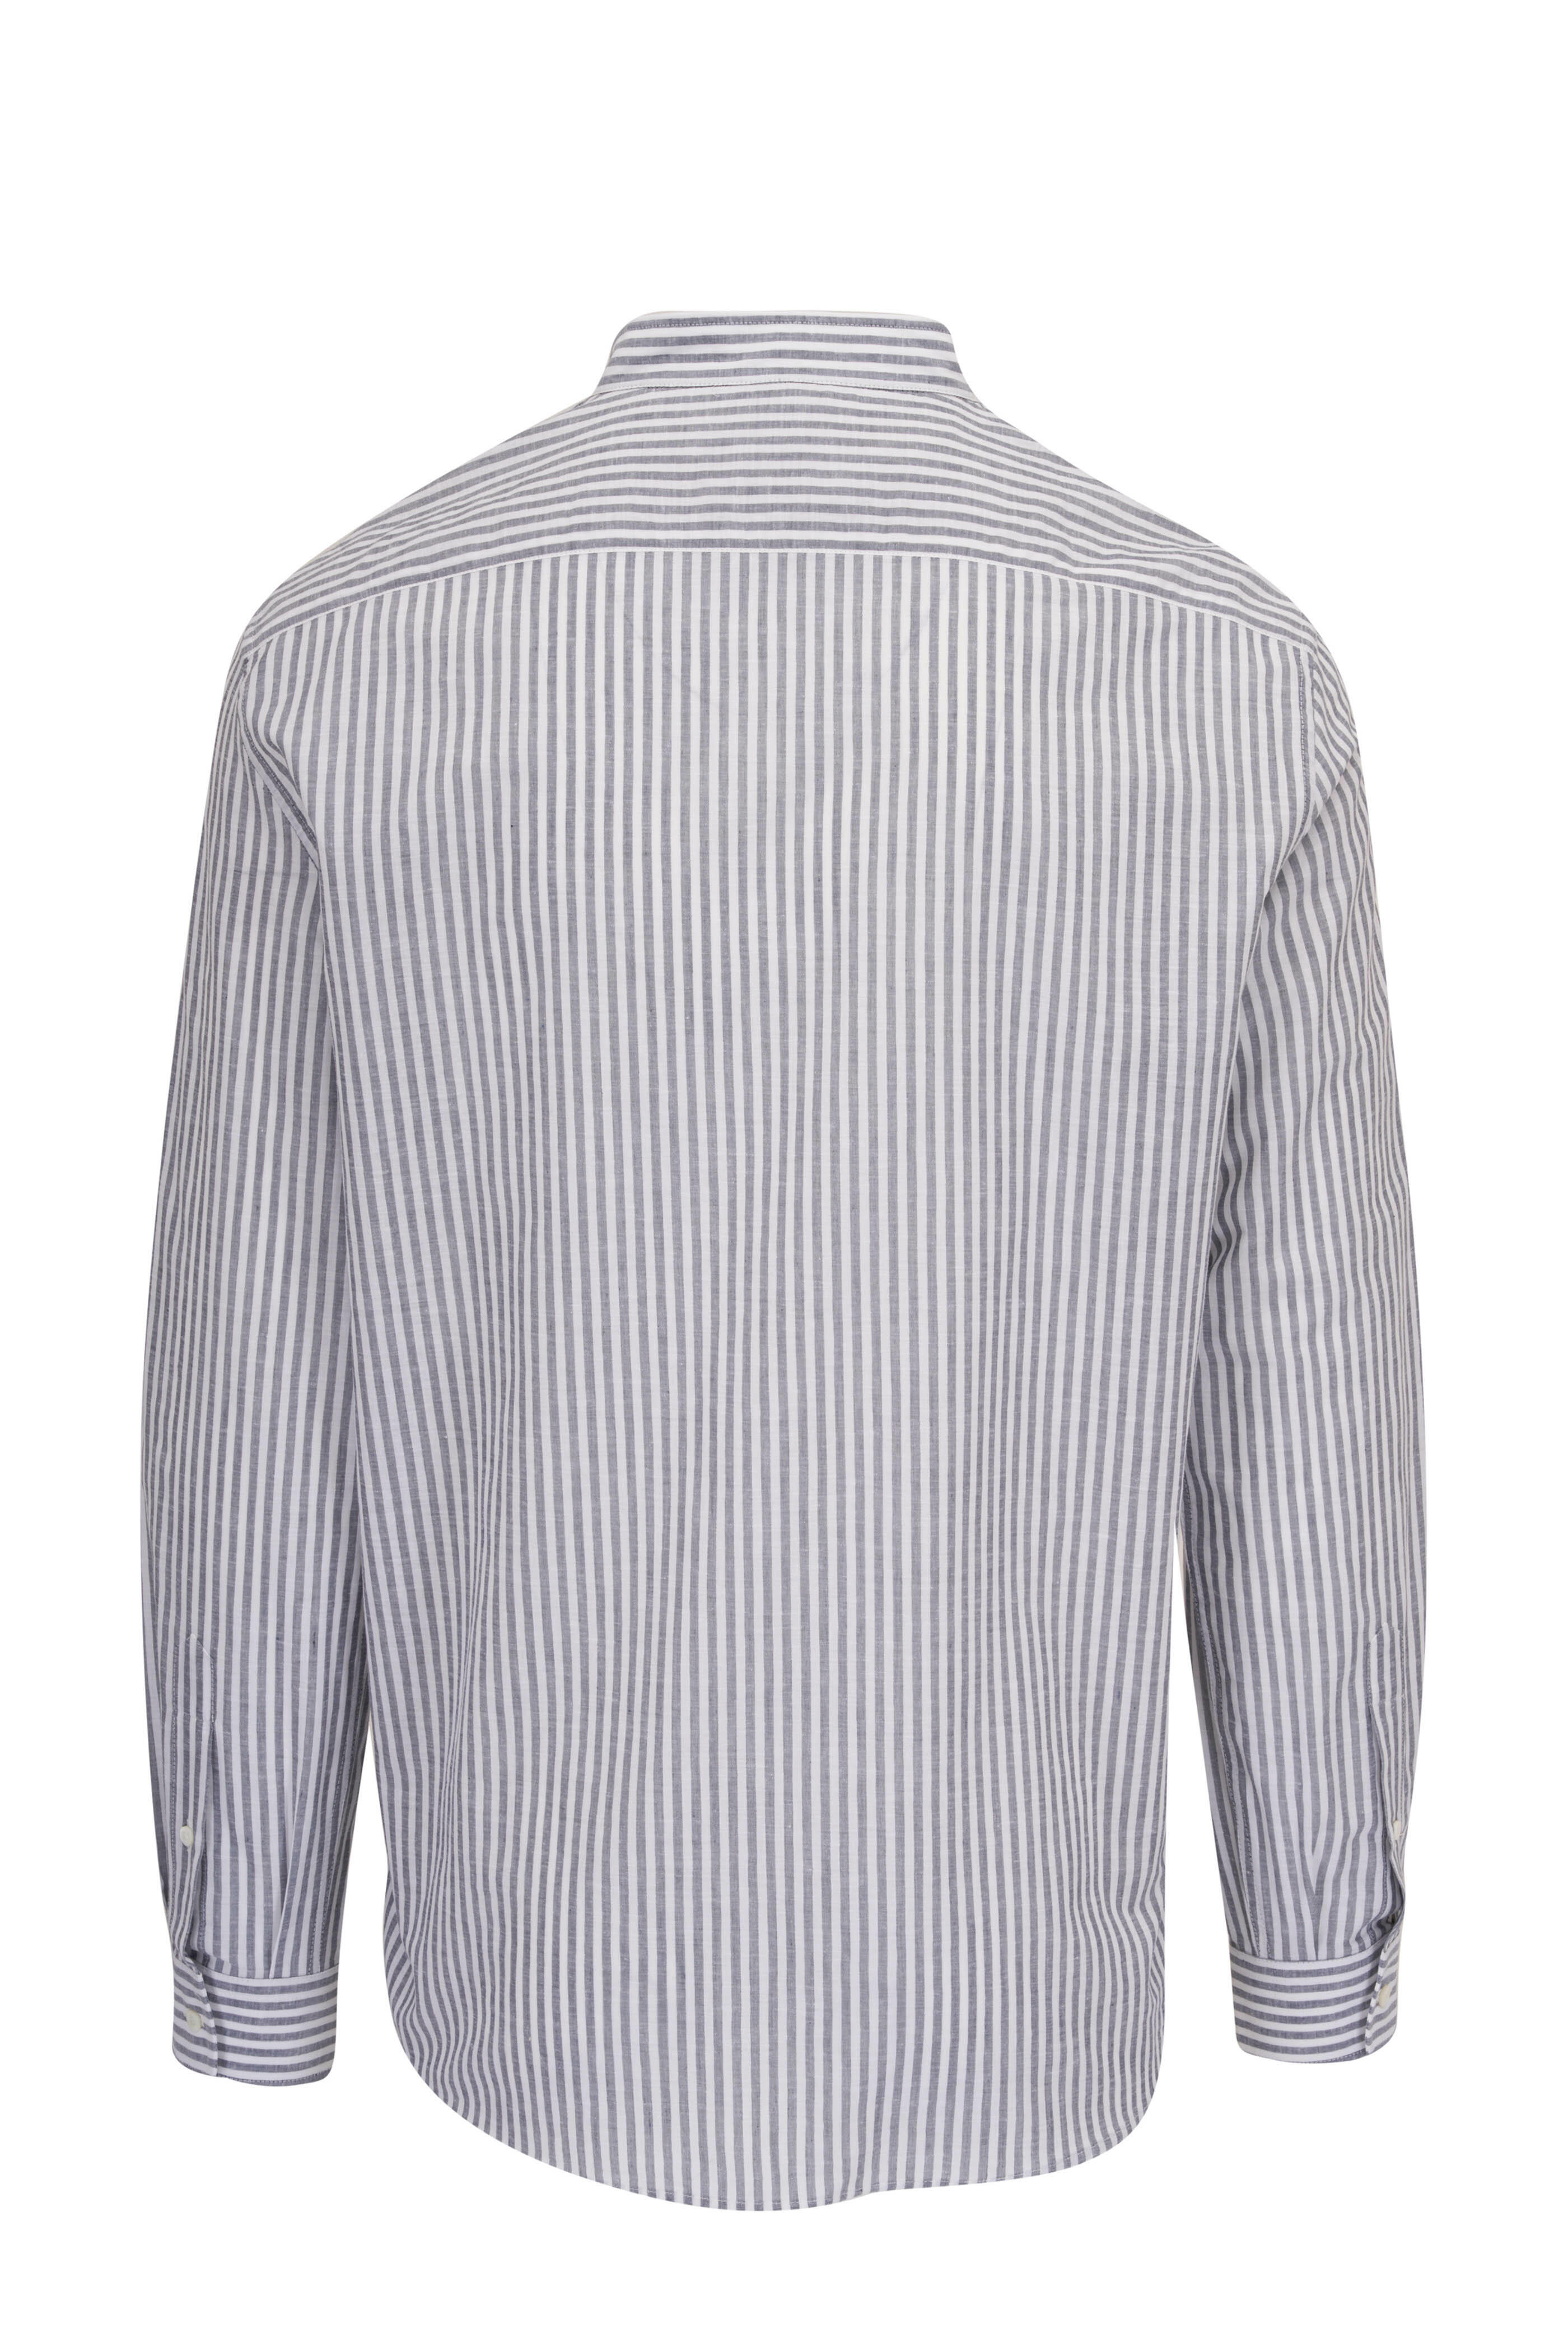 Brunello Cucinelli - White & Blue Striped Mandarin Collar Sport Shirt